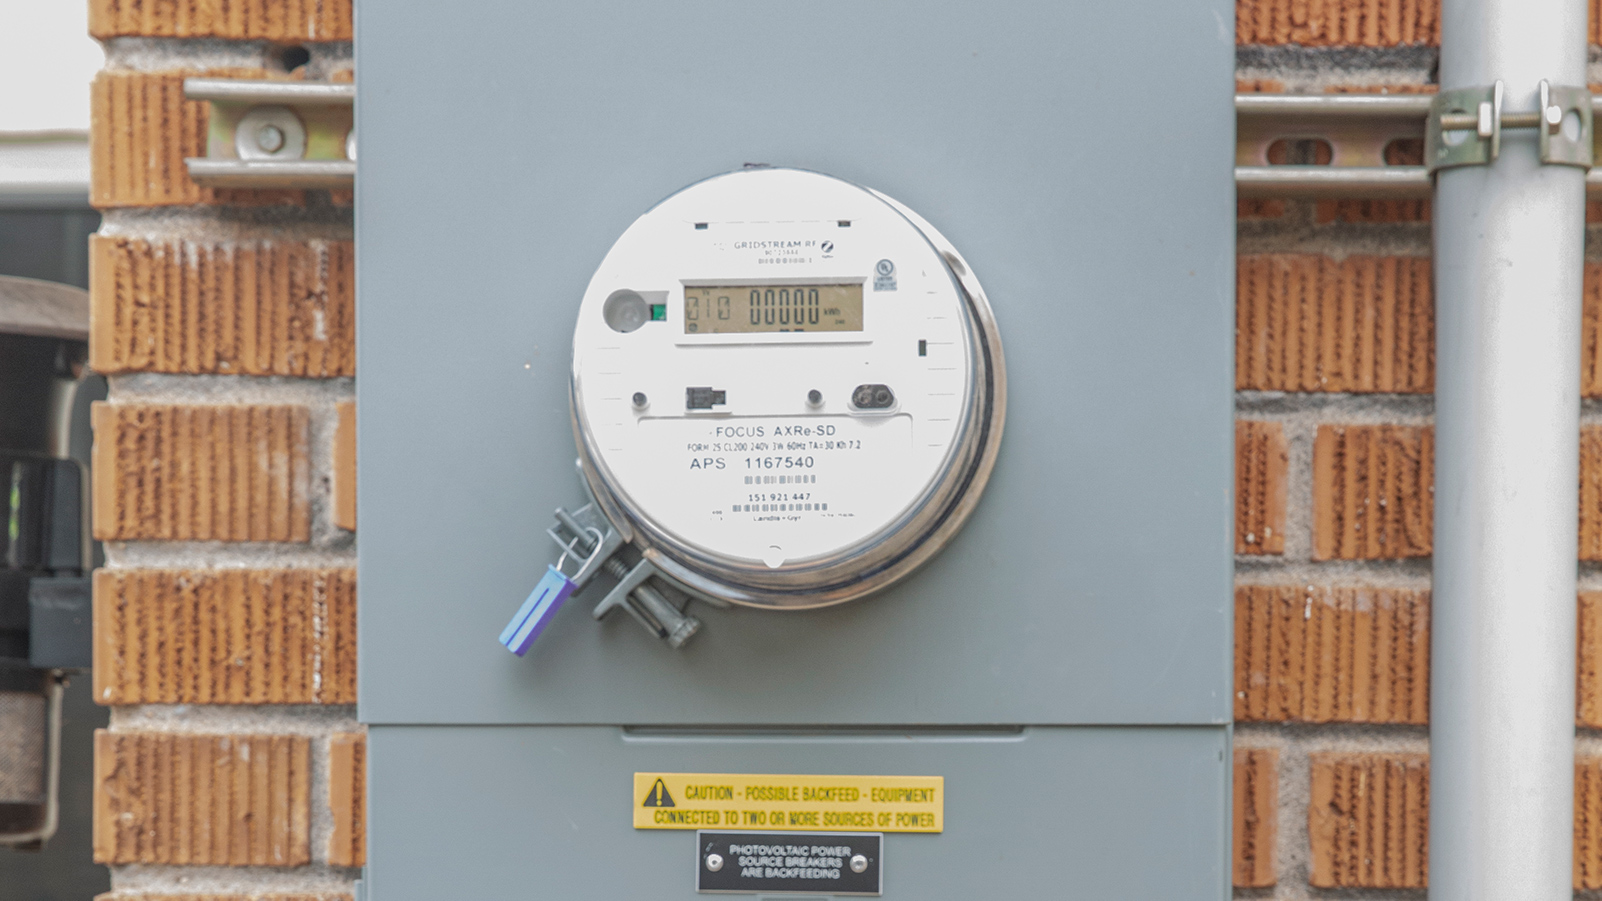 BiDirectional meter on a brick wall.